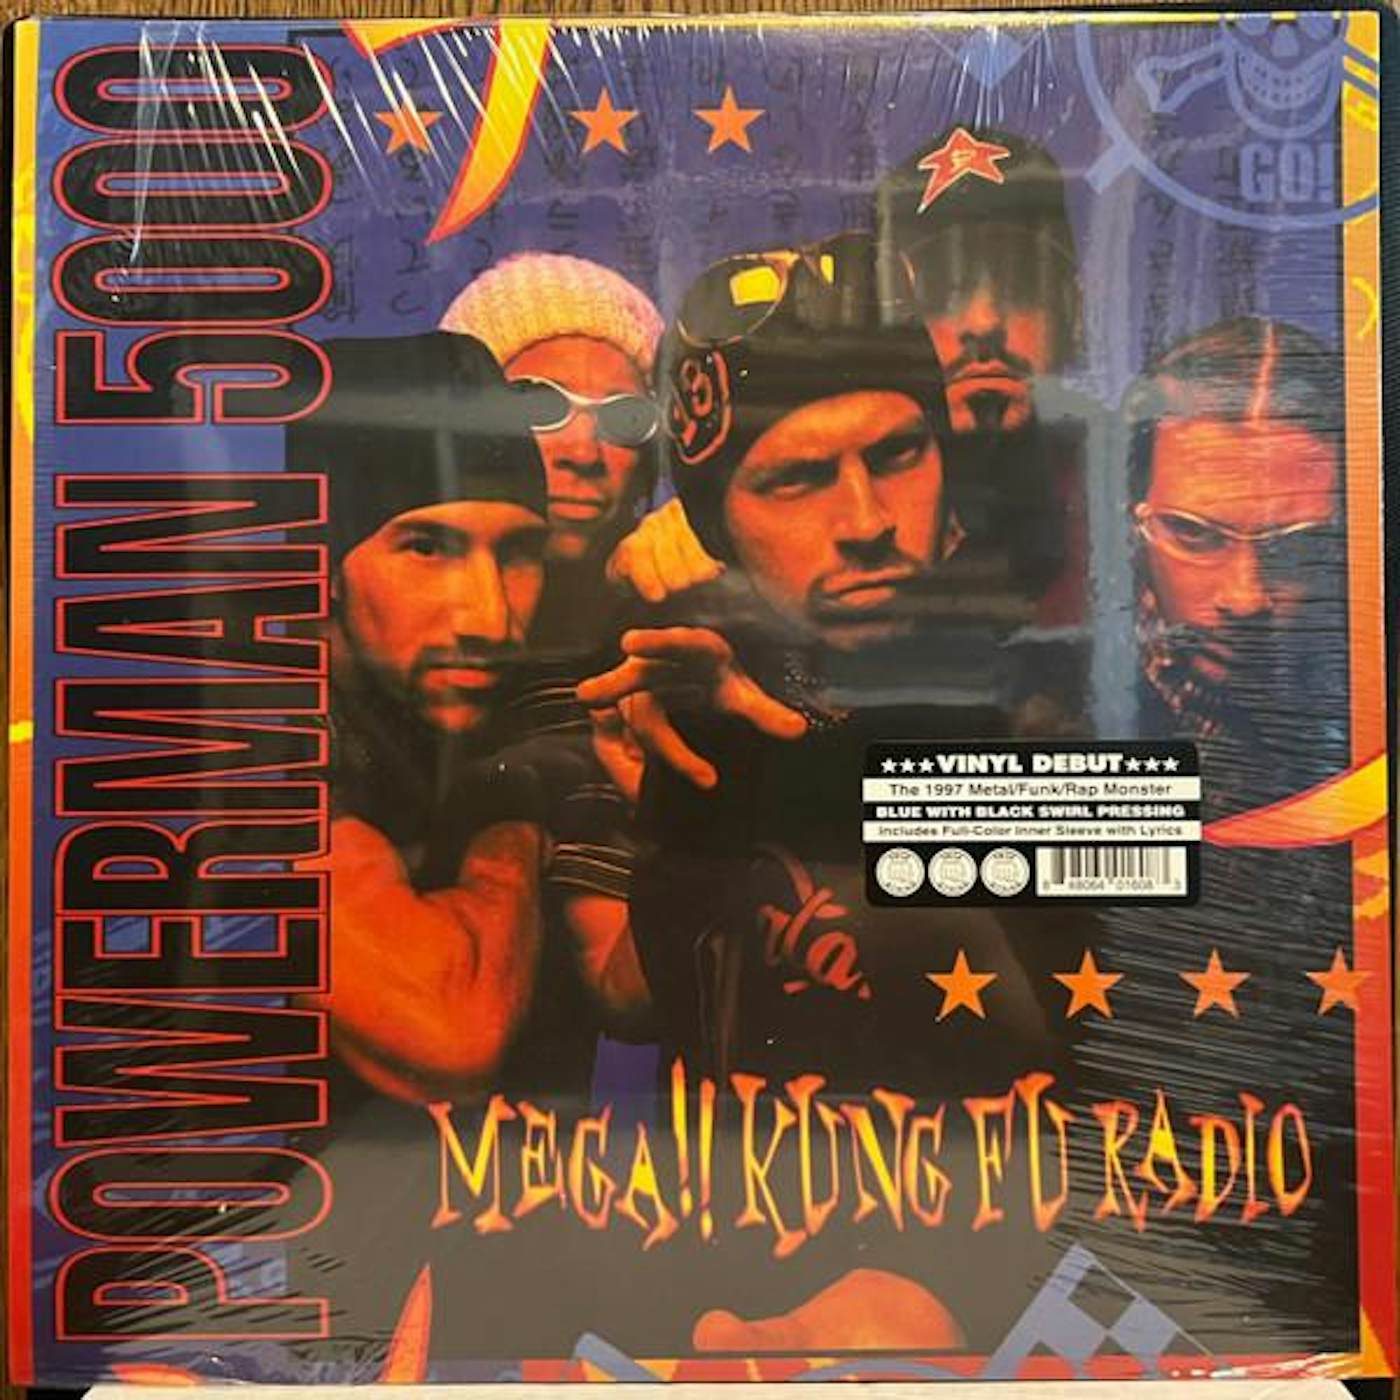 Powerman 5000 MEGA!! KUNG FU RADIO (BLUE WITH BLACK SWIRL VINYL) Vinyl Record